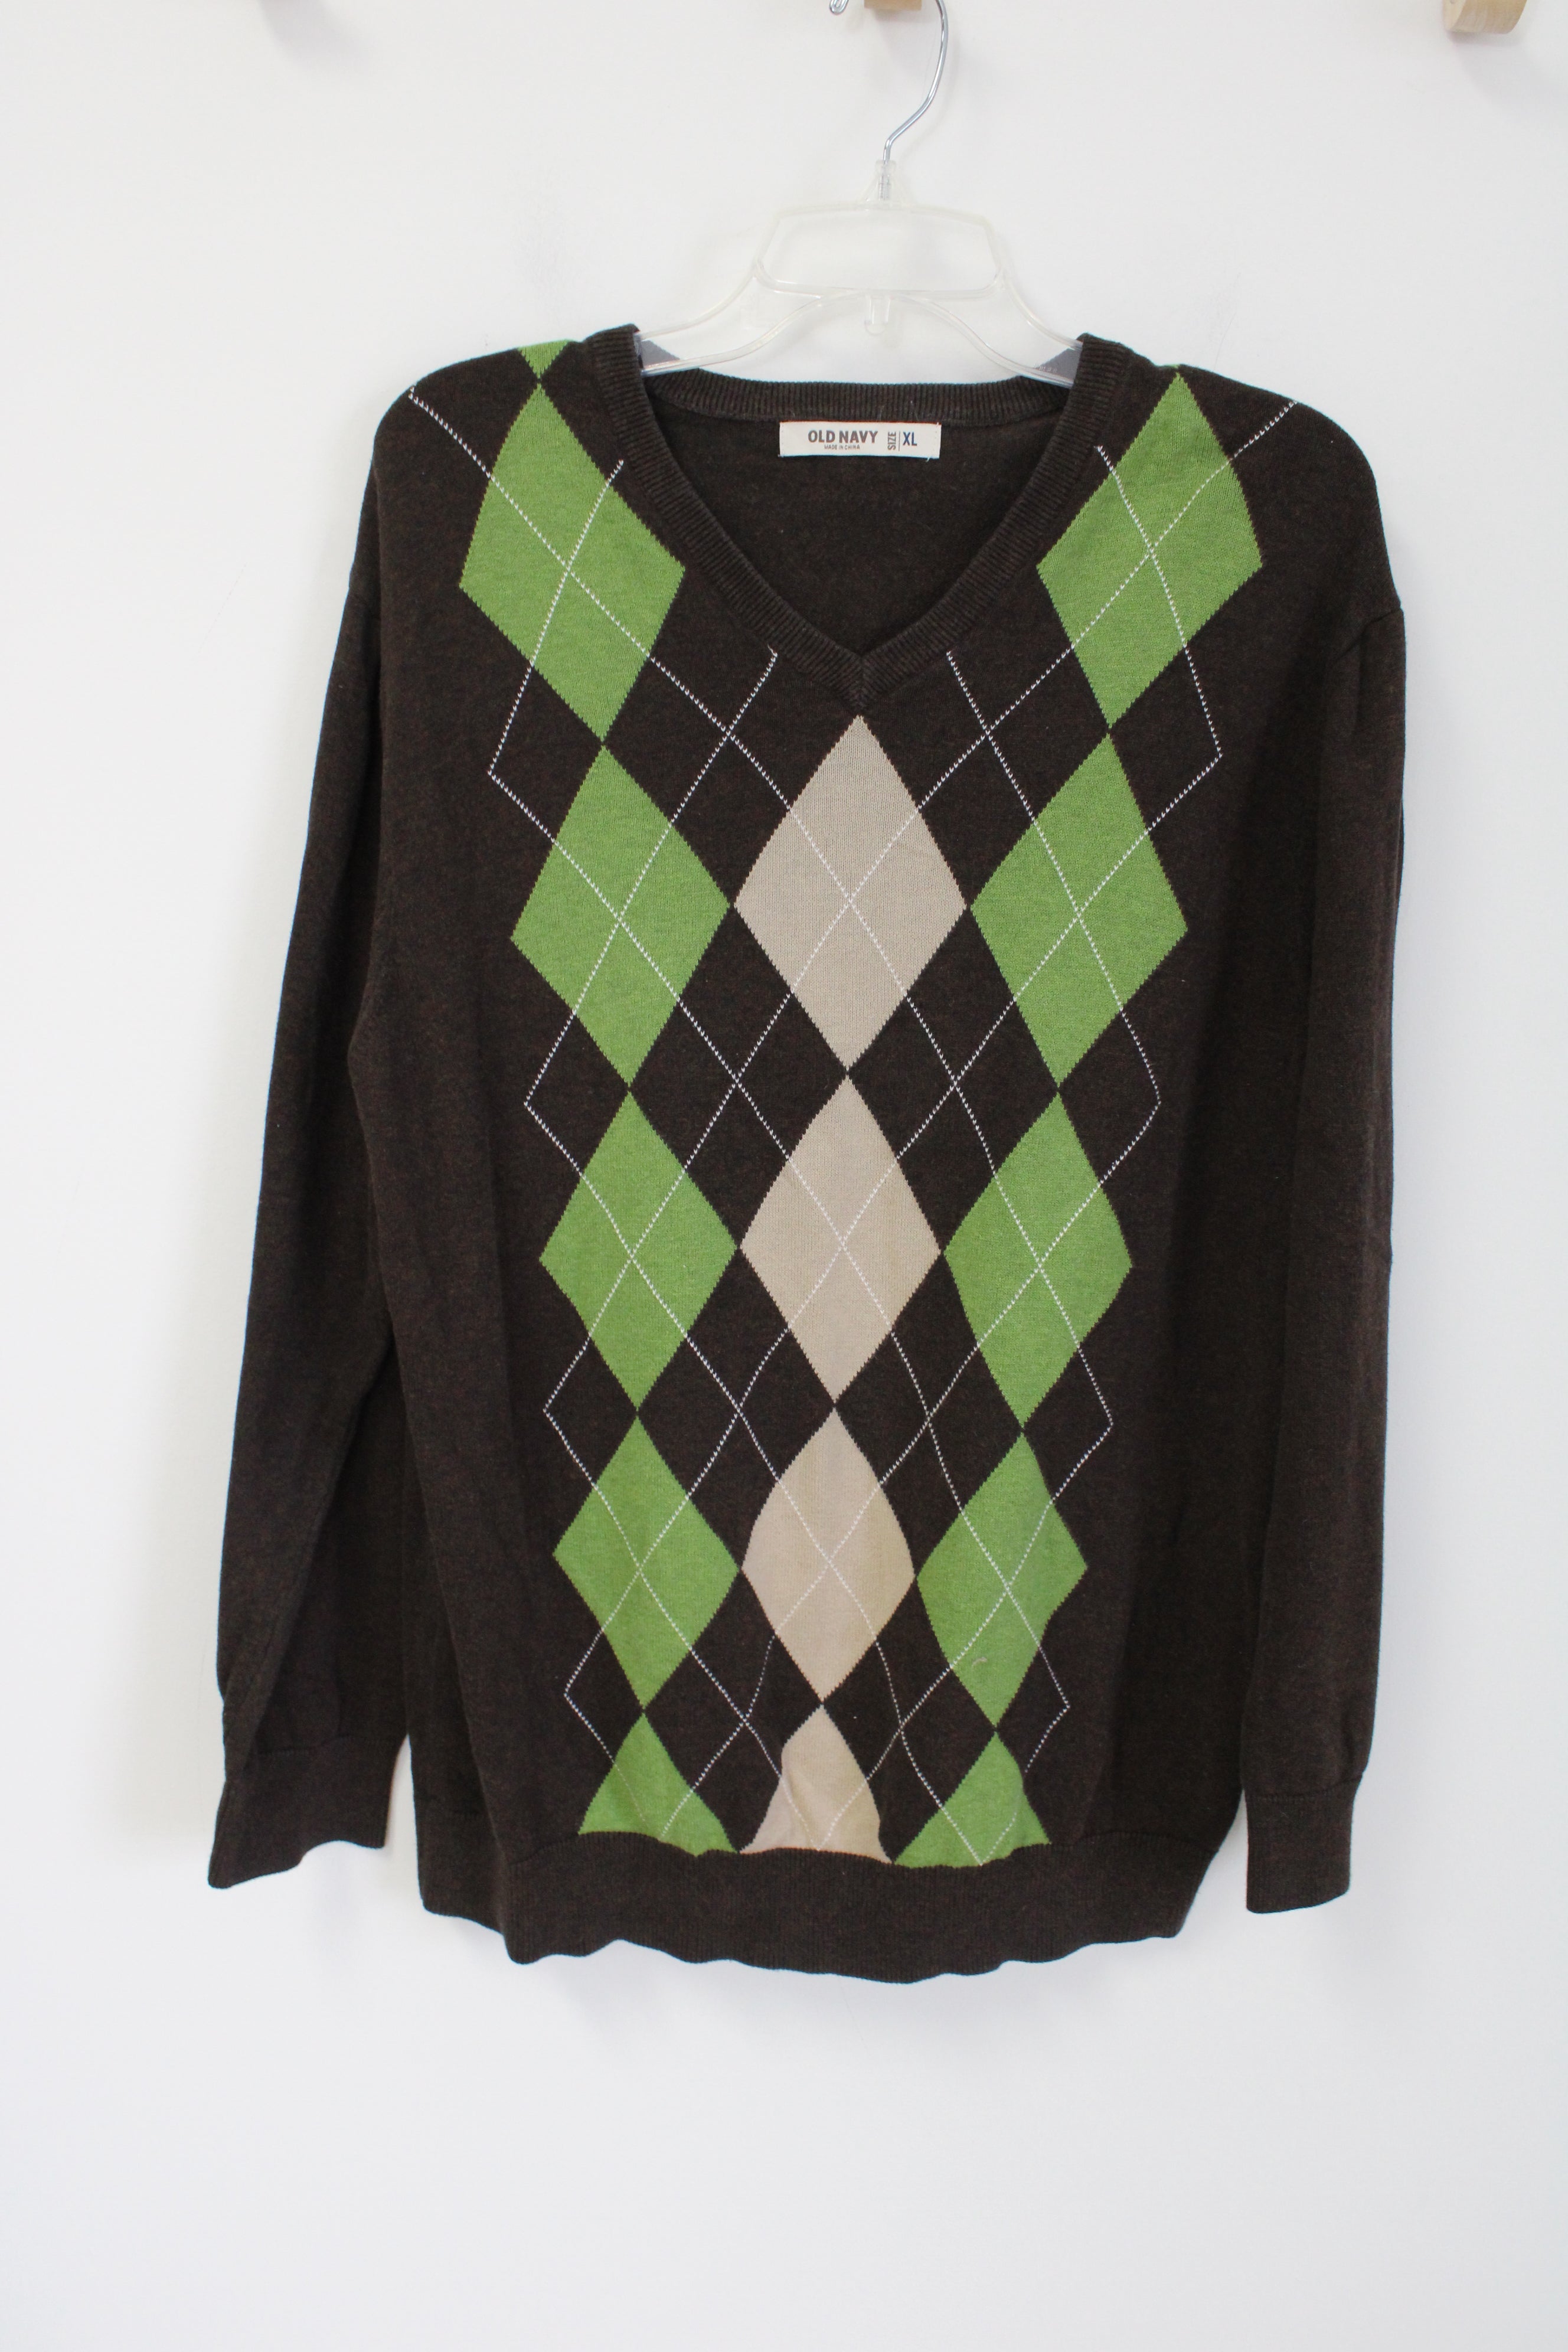 Old Navy Brown Green Argyle Sweater | XL